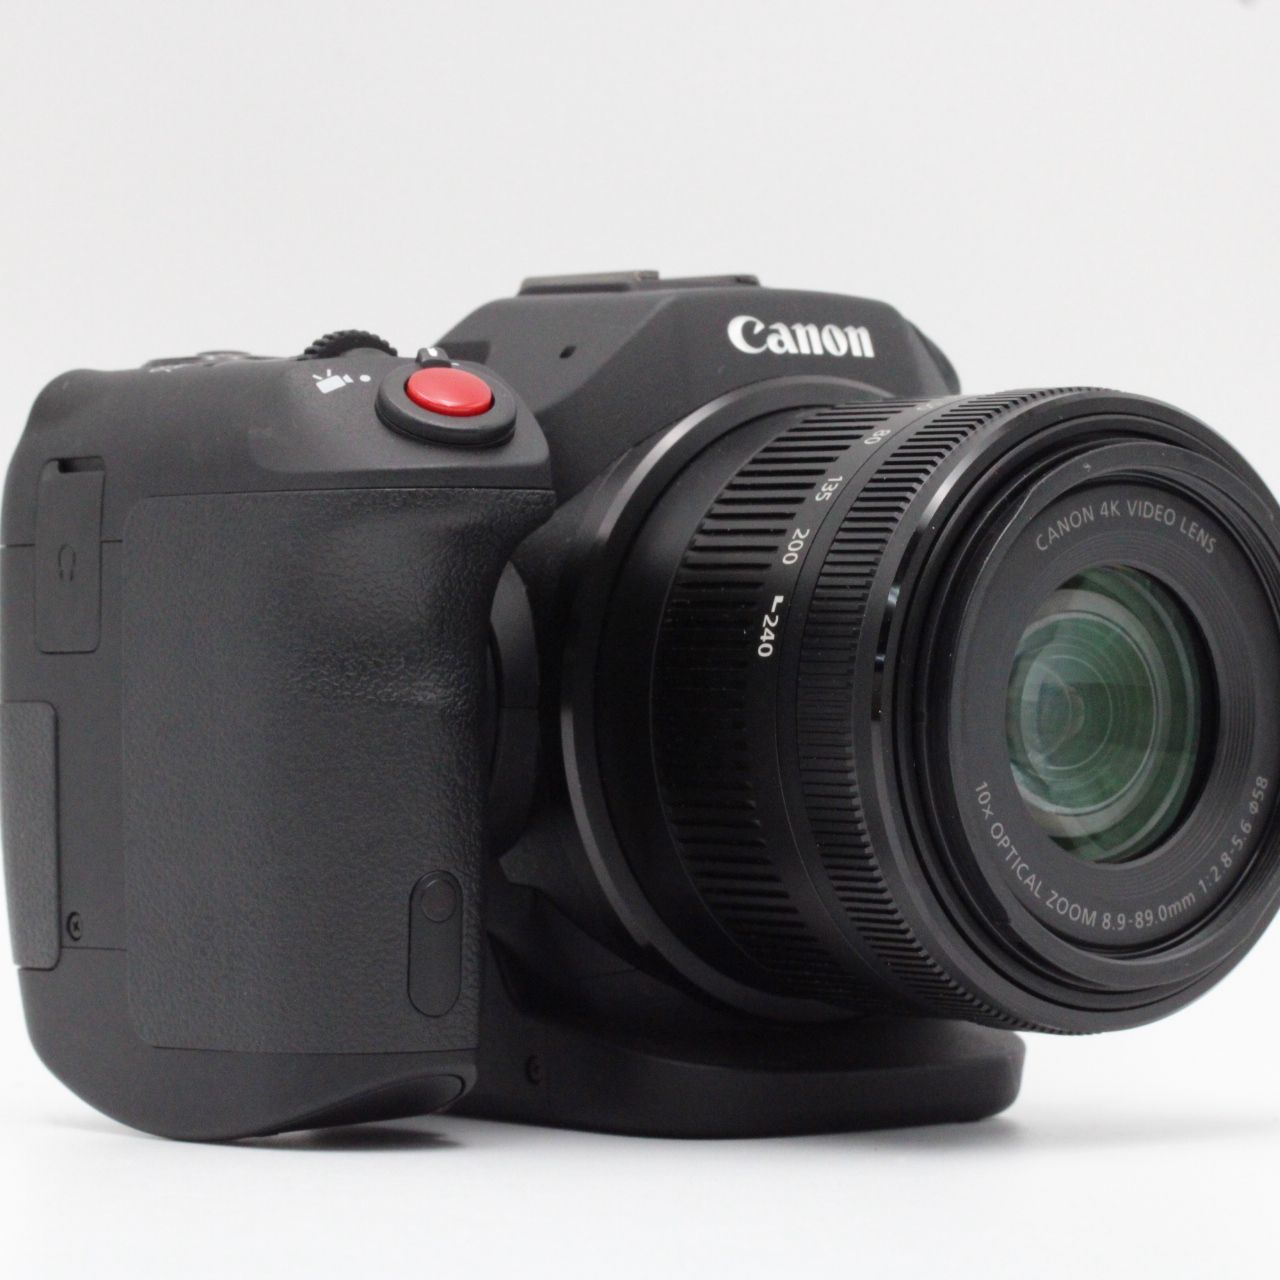 Canon XC15 4K UHD プロフェッショナルビデオカメラ キャノン #2003 